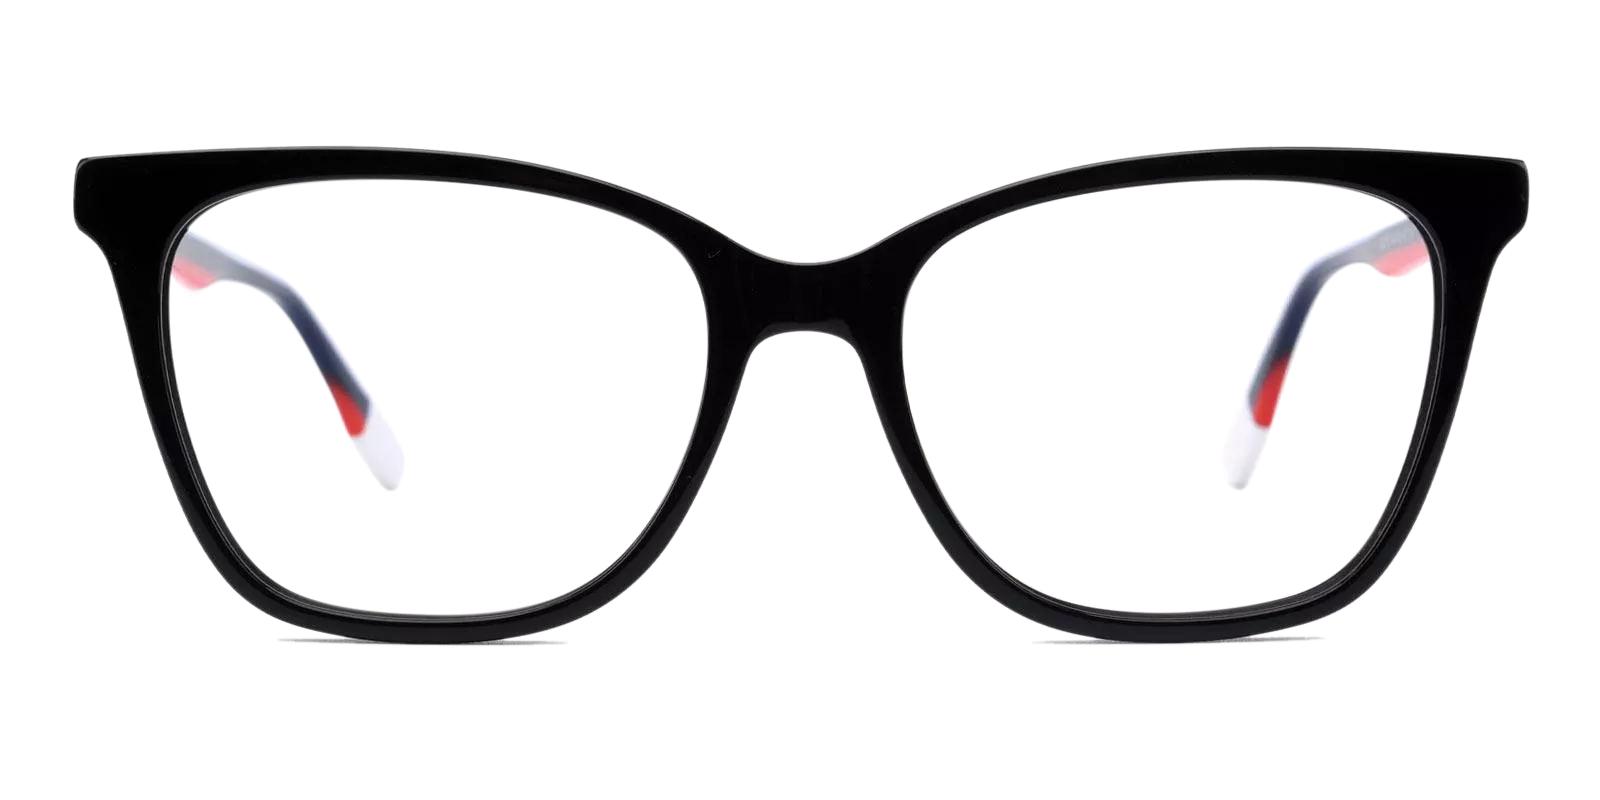 Pamela Black Acetate Eyeglasses , Fashion , SpringHinges , UniversalBridgeFit Frames from ABBE Glasses